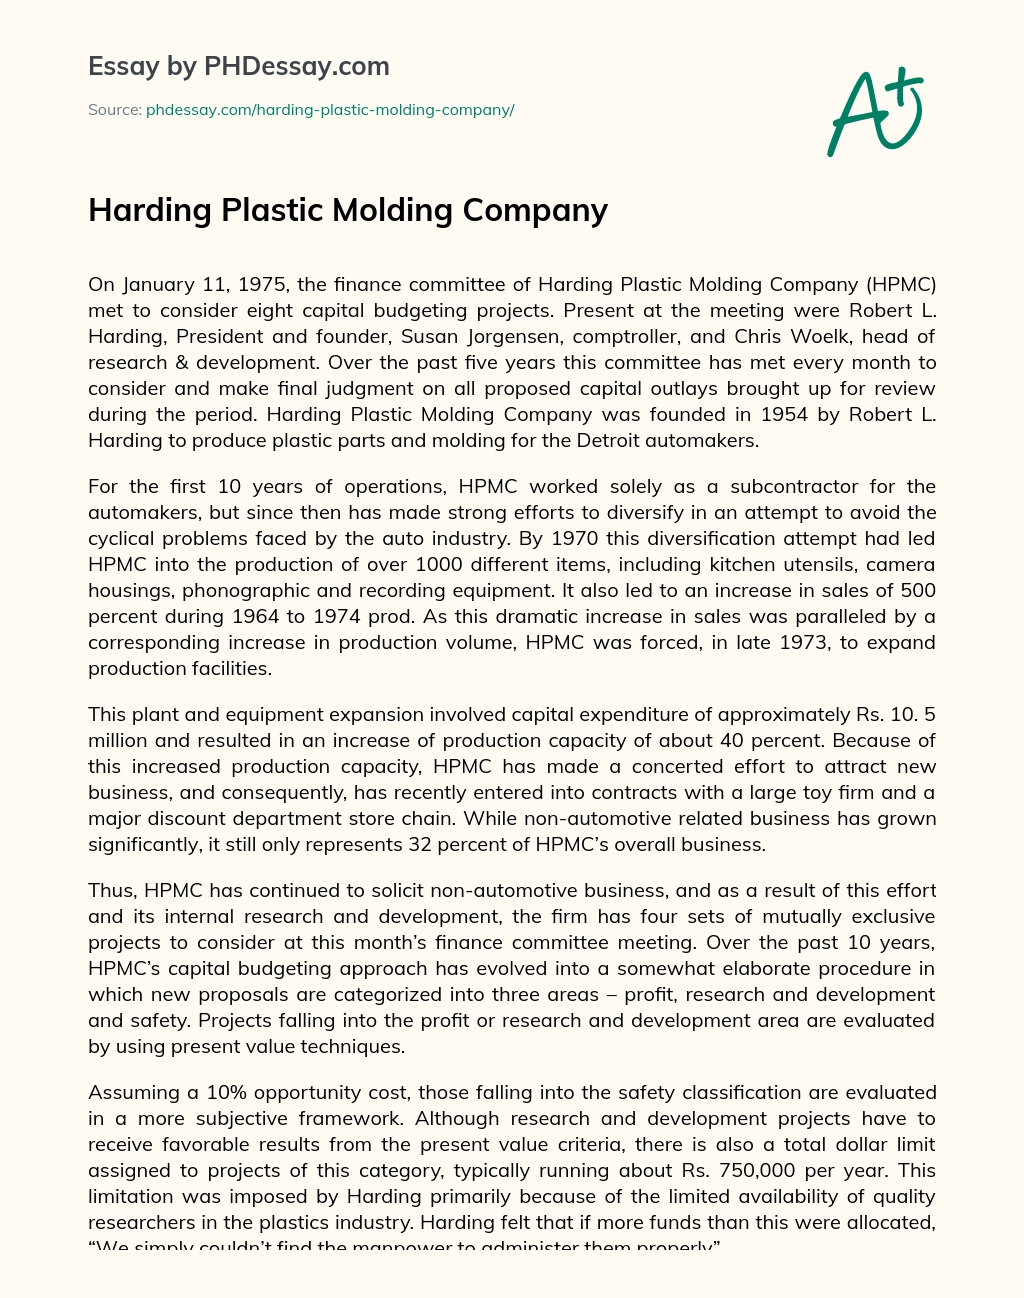 Harding Plastic Molding Company essay